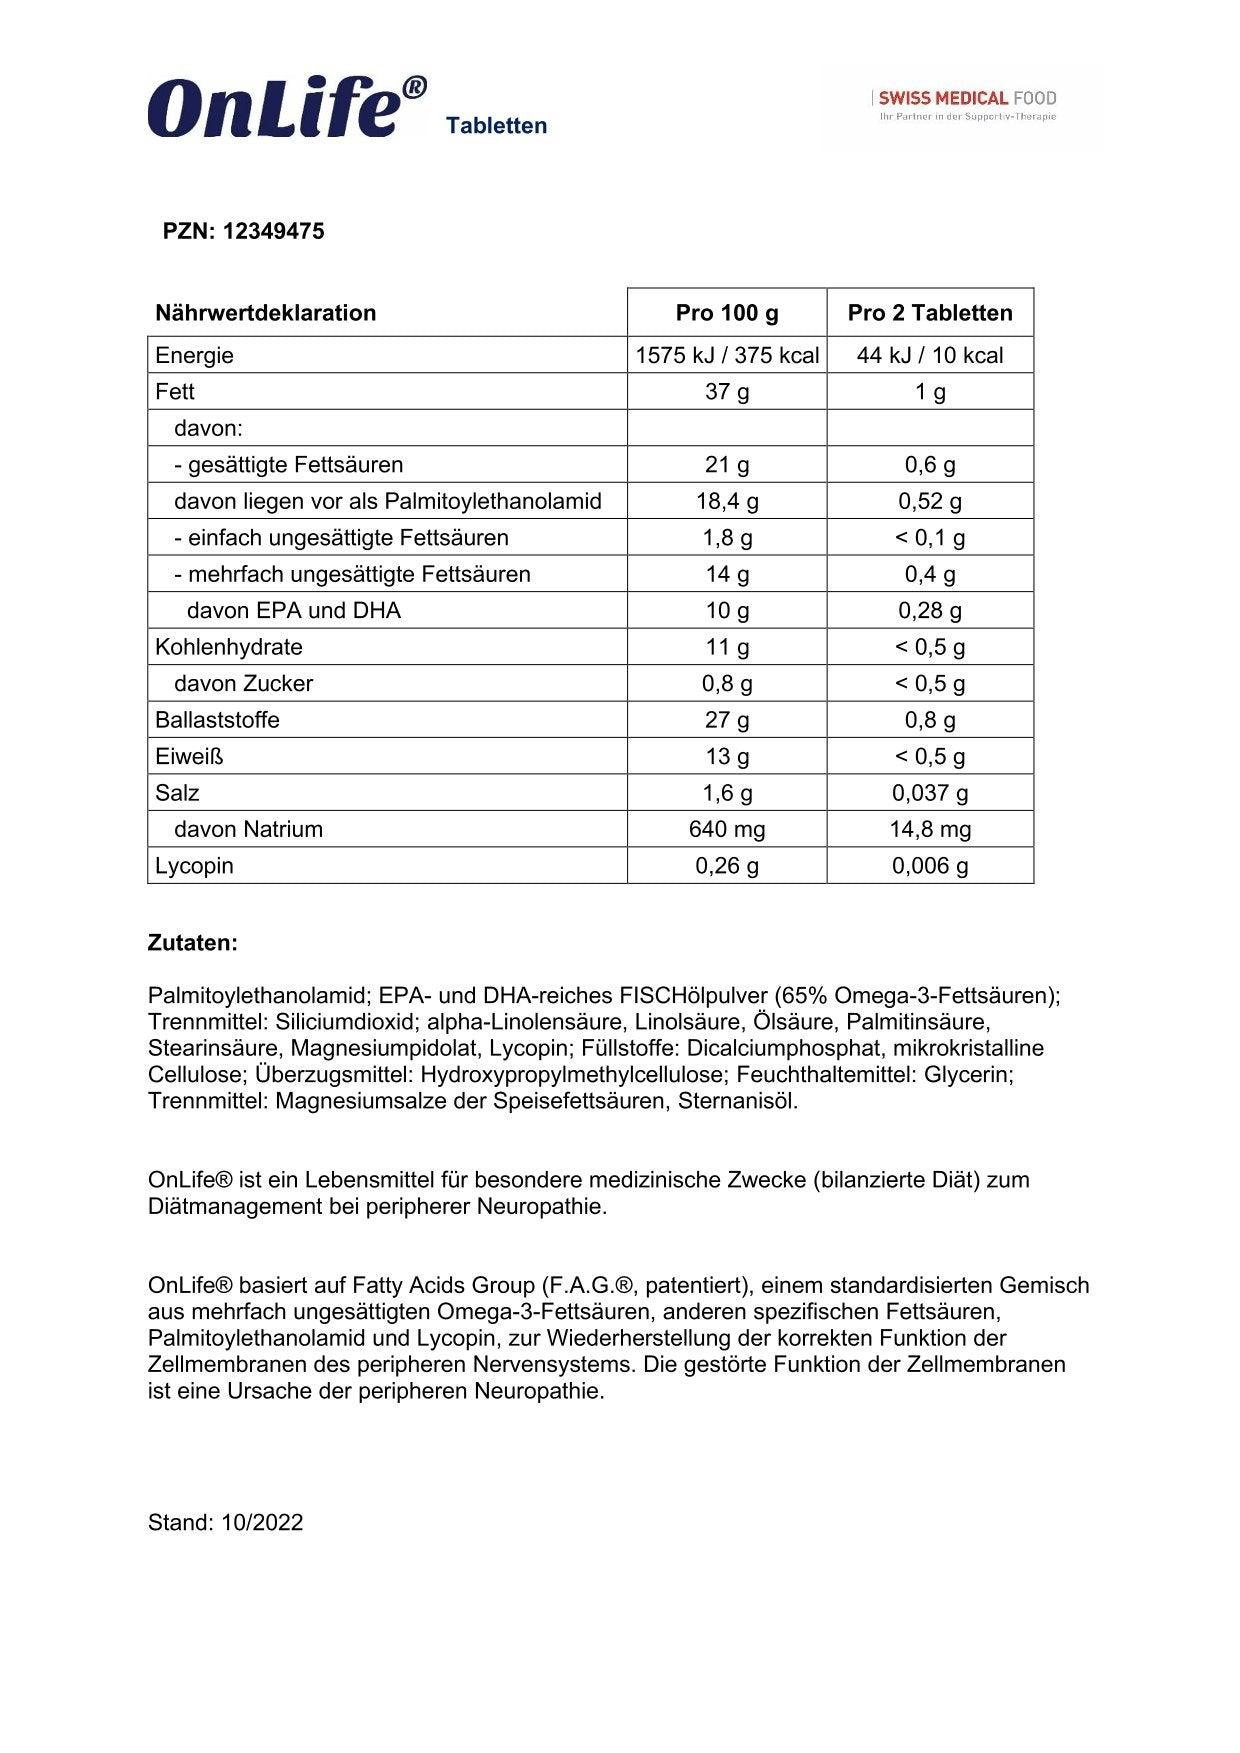 OnLife® Therapie komplett gegen Polyneuropathie - 5x Tabletten & 1x Creme - Swiss Medical Food DE GmbH